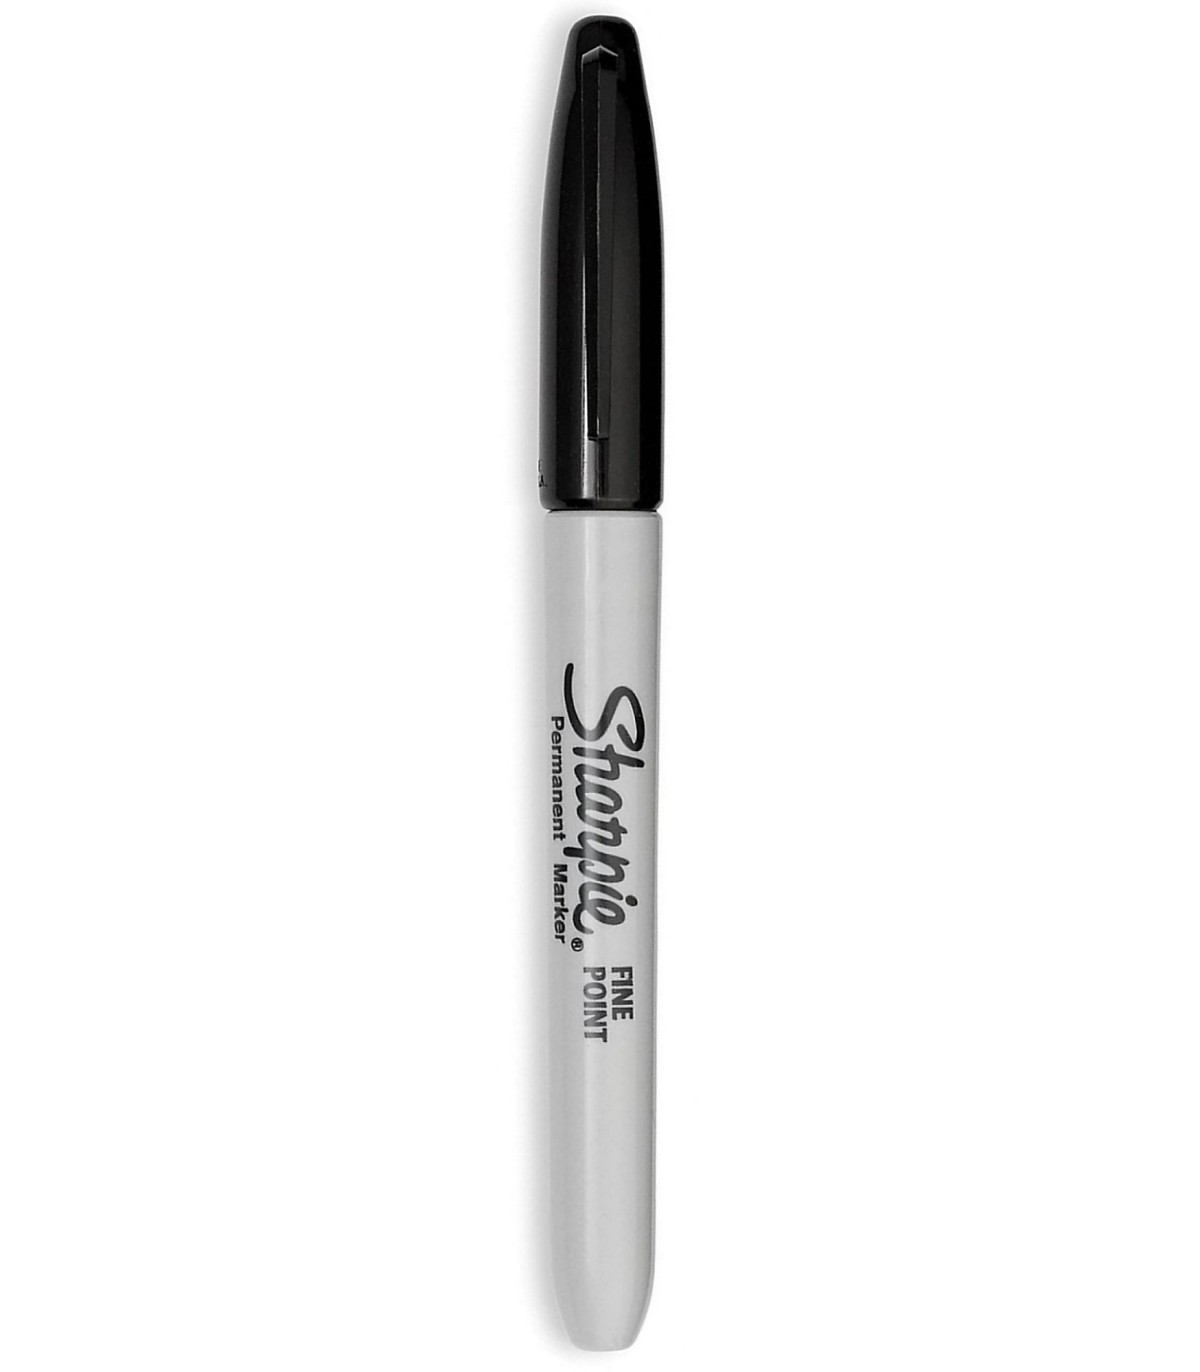 SHARPIE 1985857 Pen, Permanent Marker, Black, Fine Tip